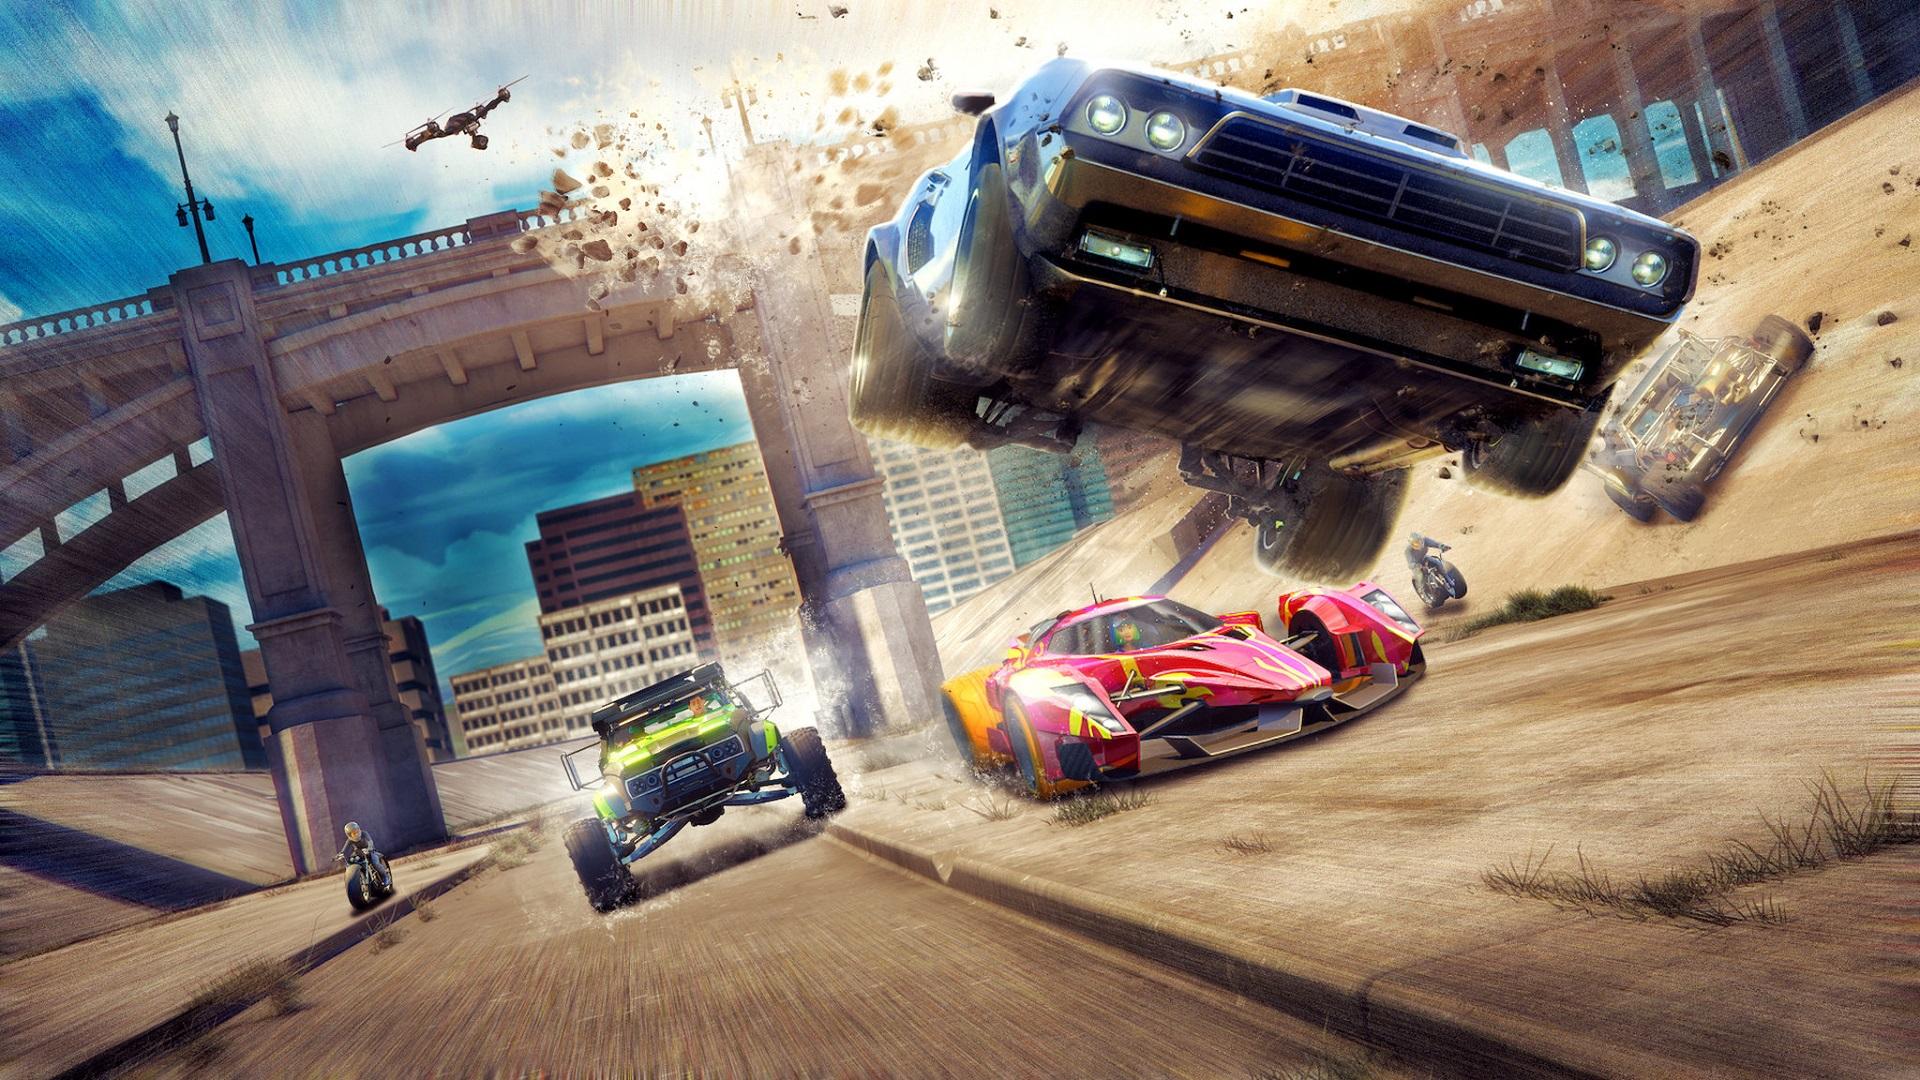 Fast & Furious: Spy Racers